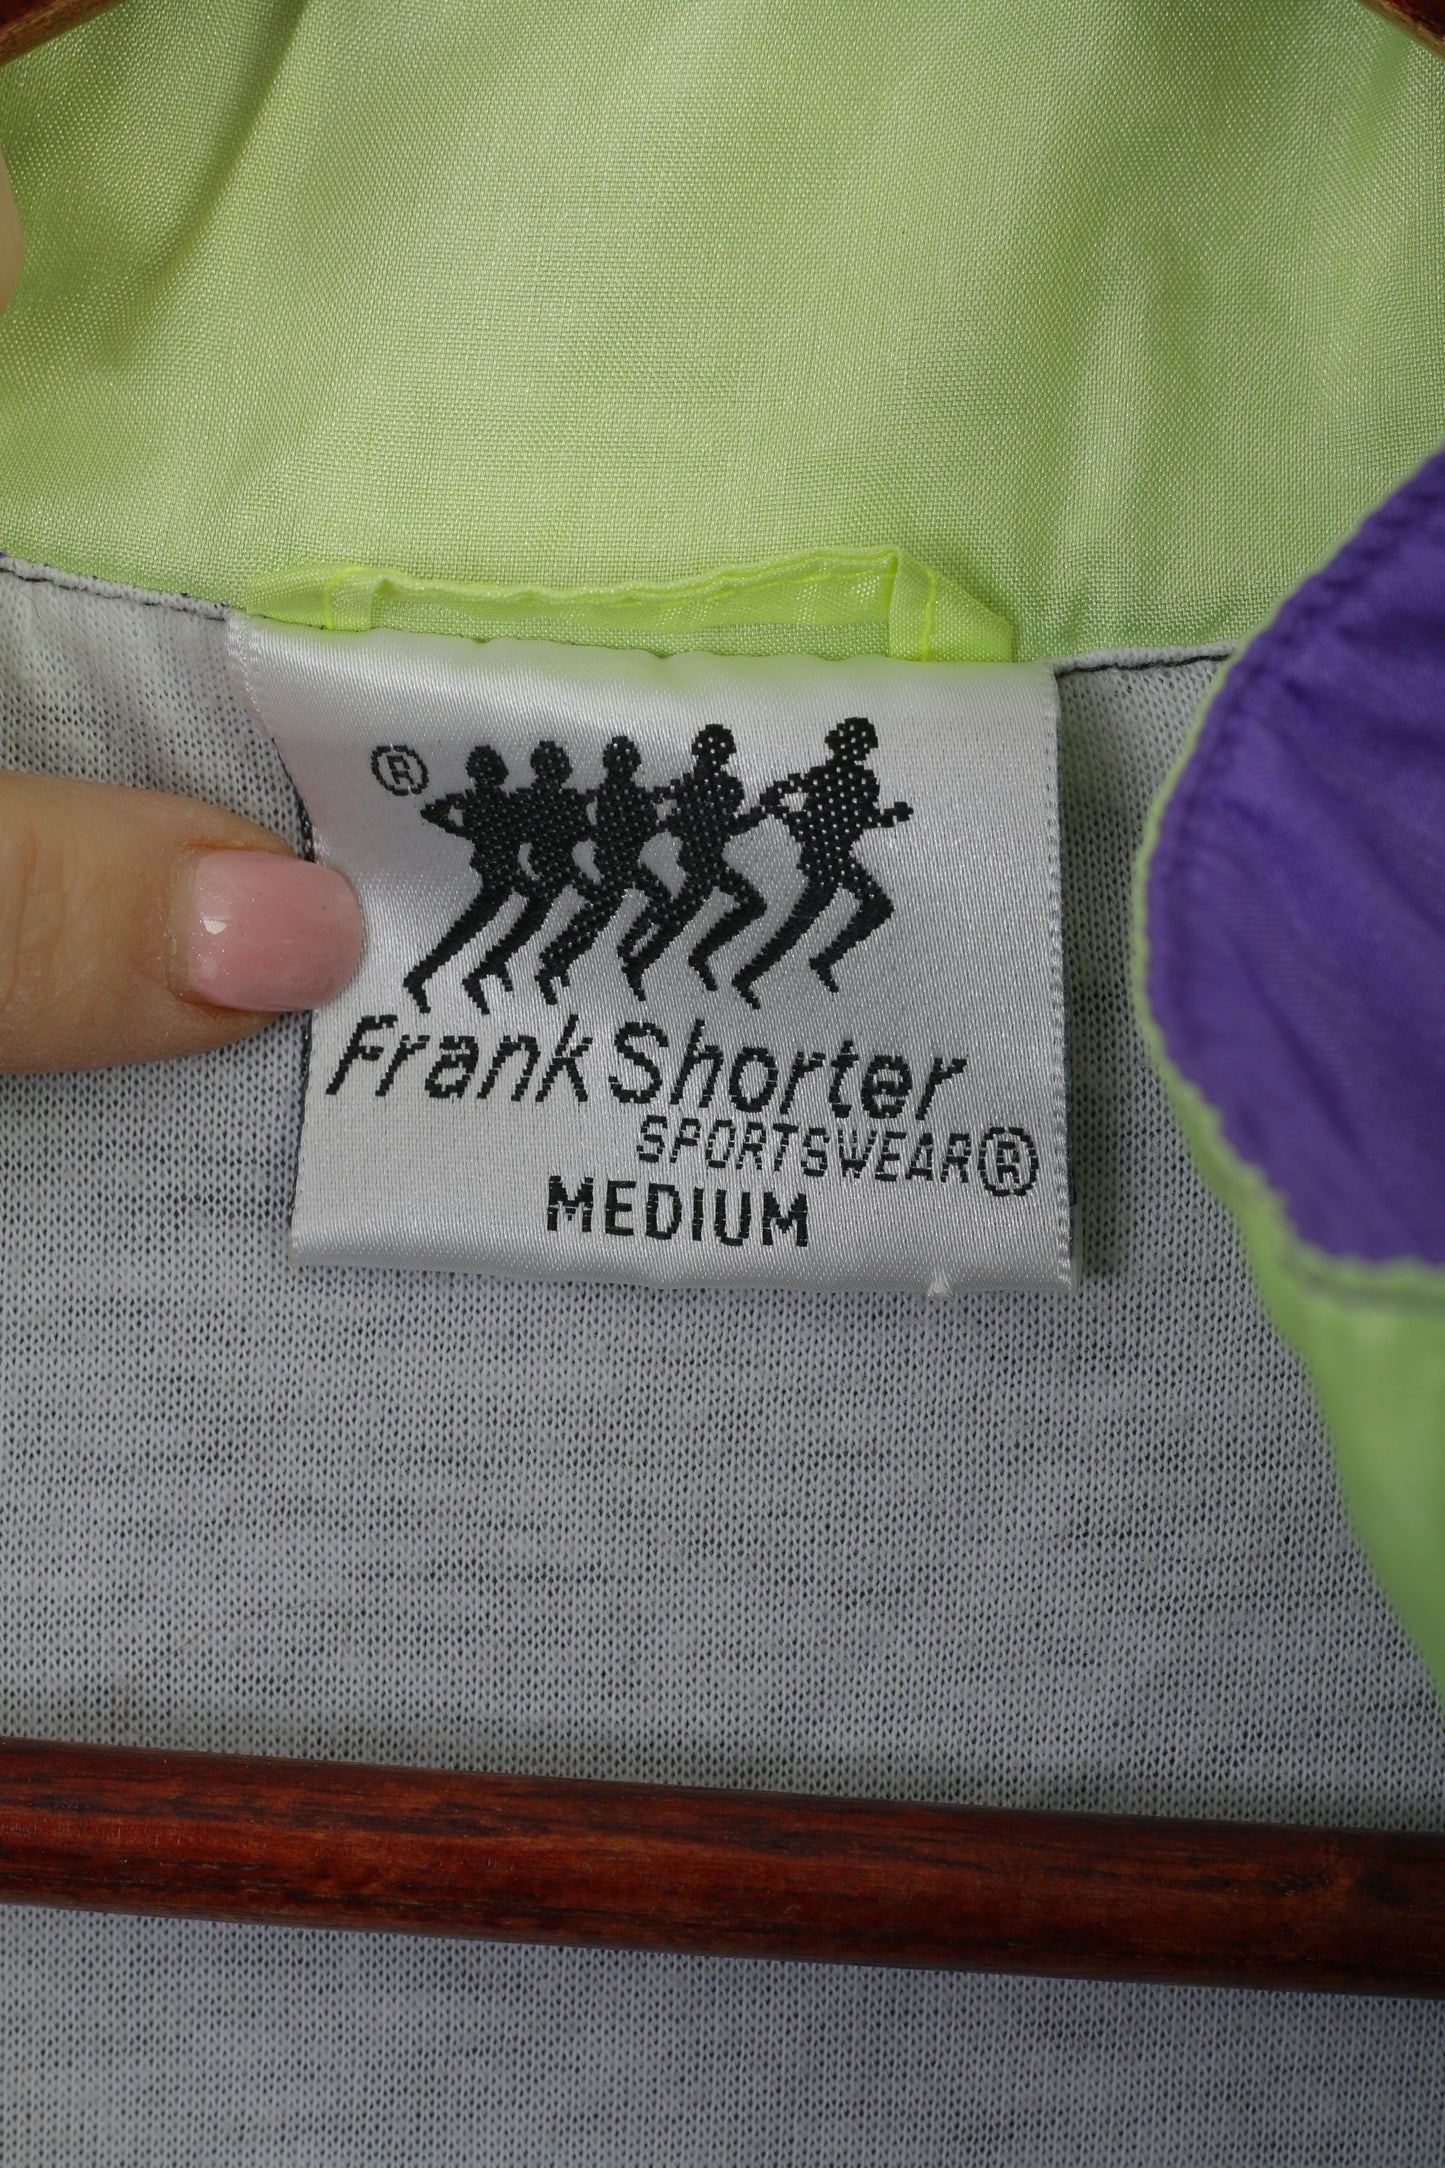 Frank Shorter Women M Jacket Black Nylon Shiny Vintage Zip Up Sportswear Top